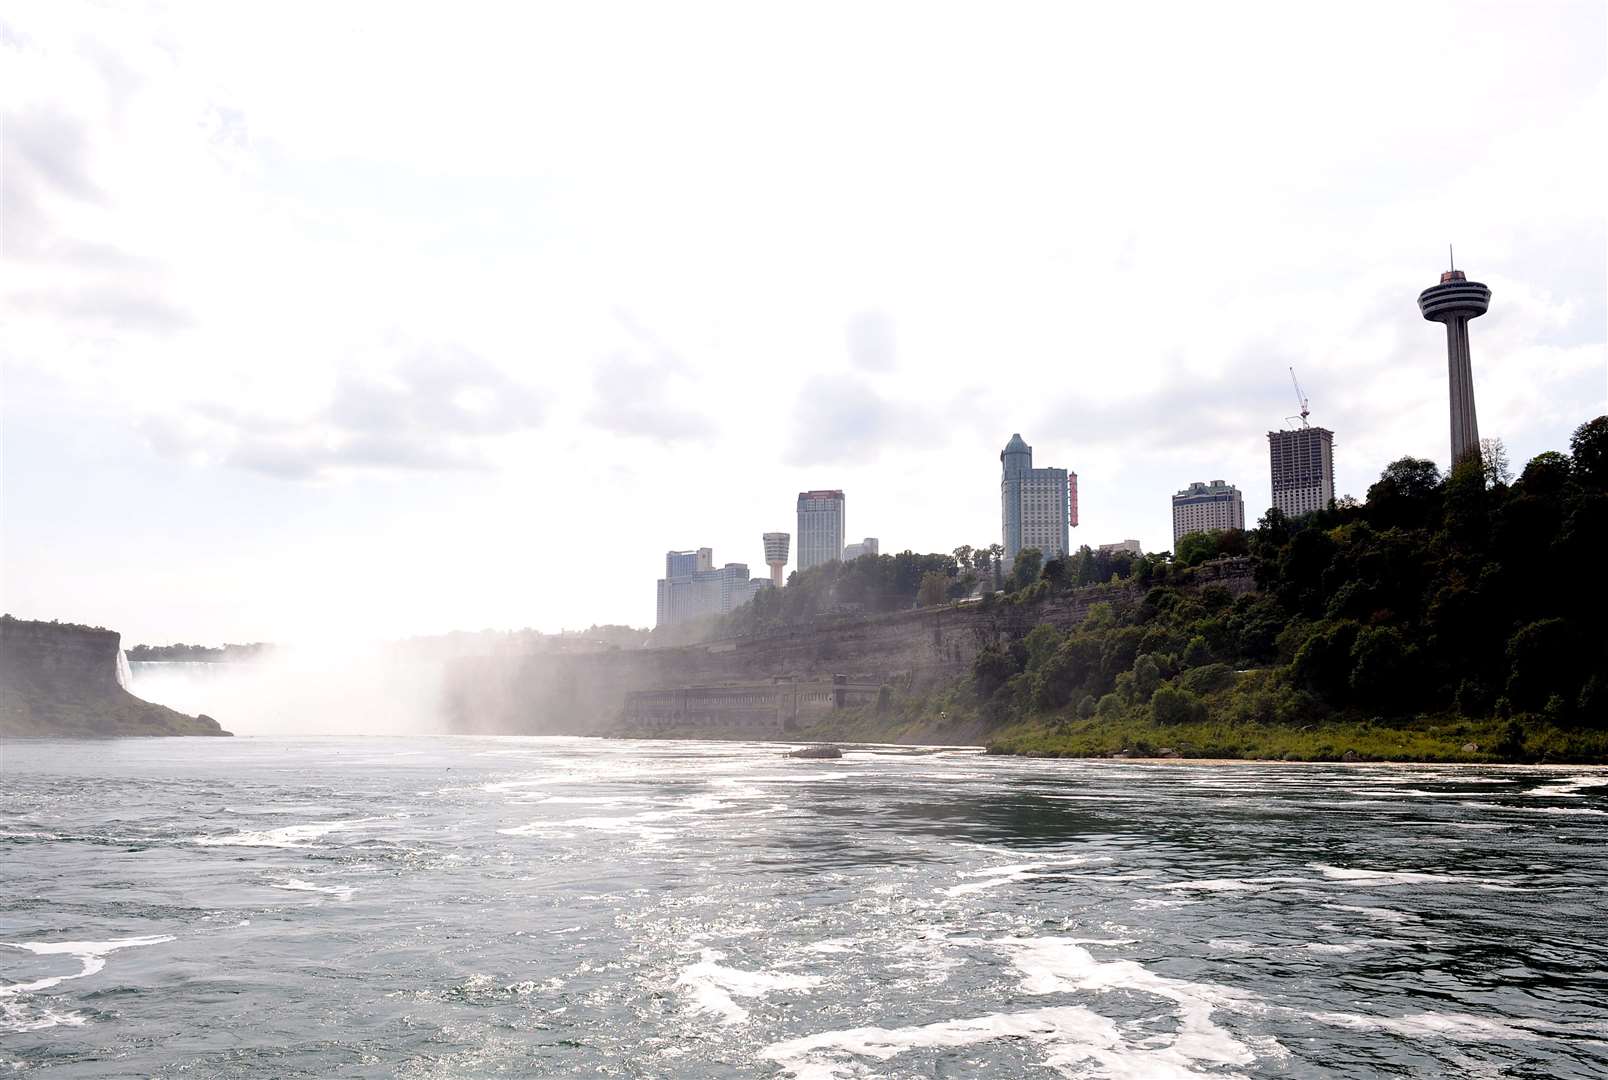 The Horseshoe falls, part of the Niagara Falls in Ontario, Canada (Ian West/PA)